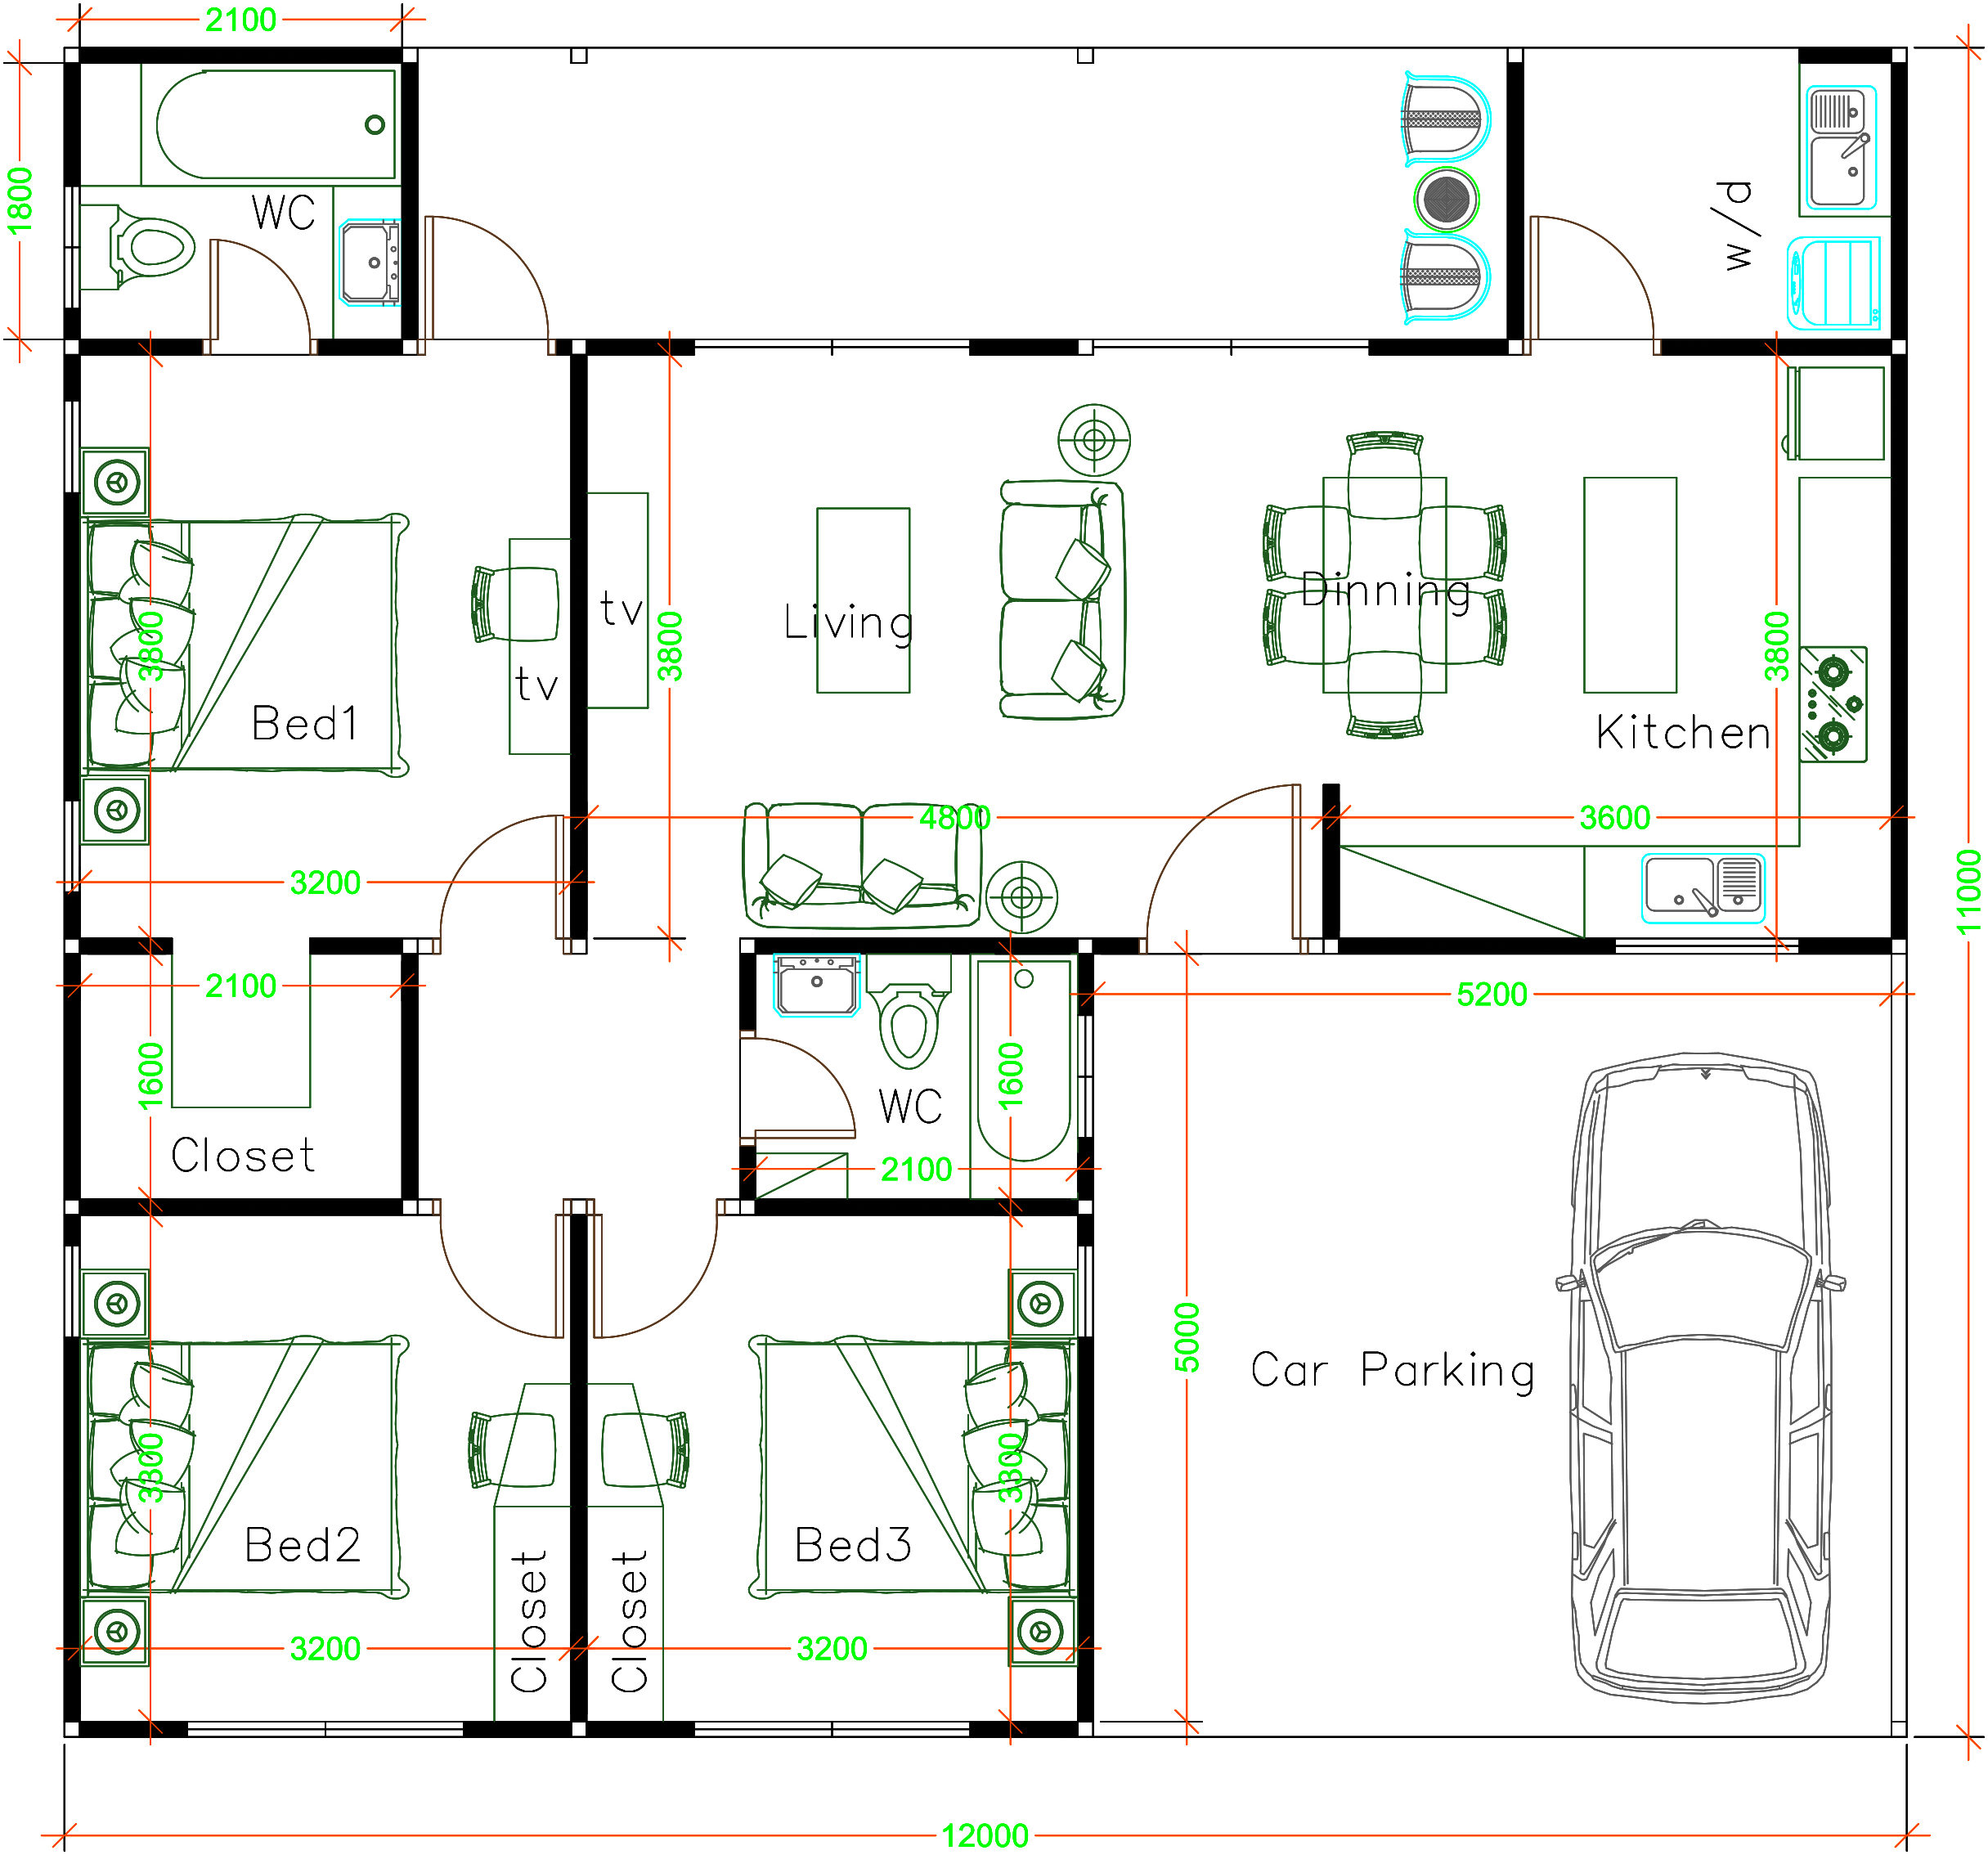 House Plans 12x11 with 3 Bedrooms Slap roof floor plan